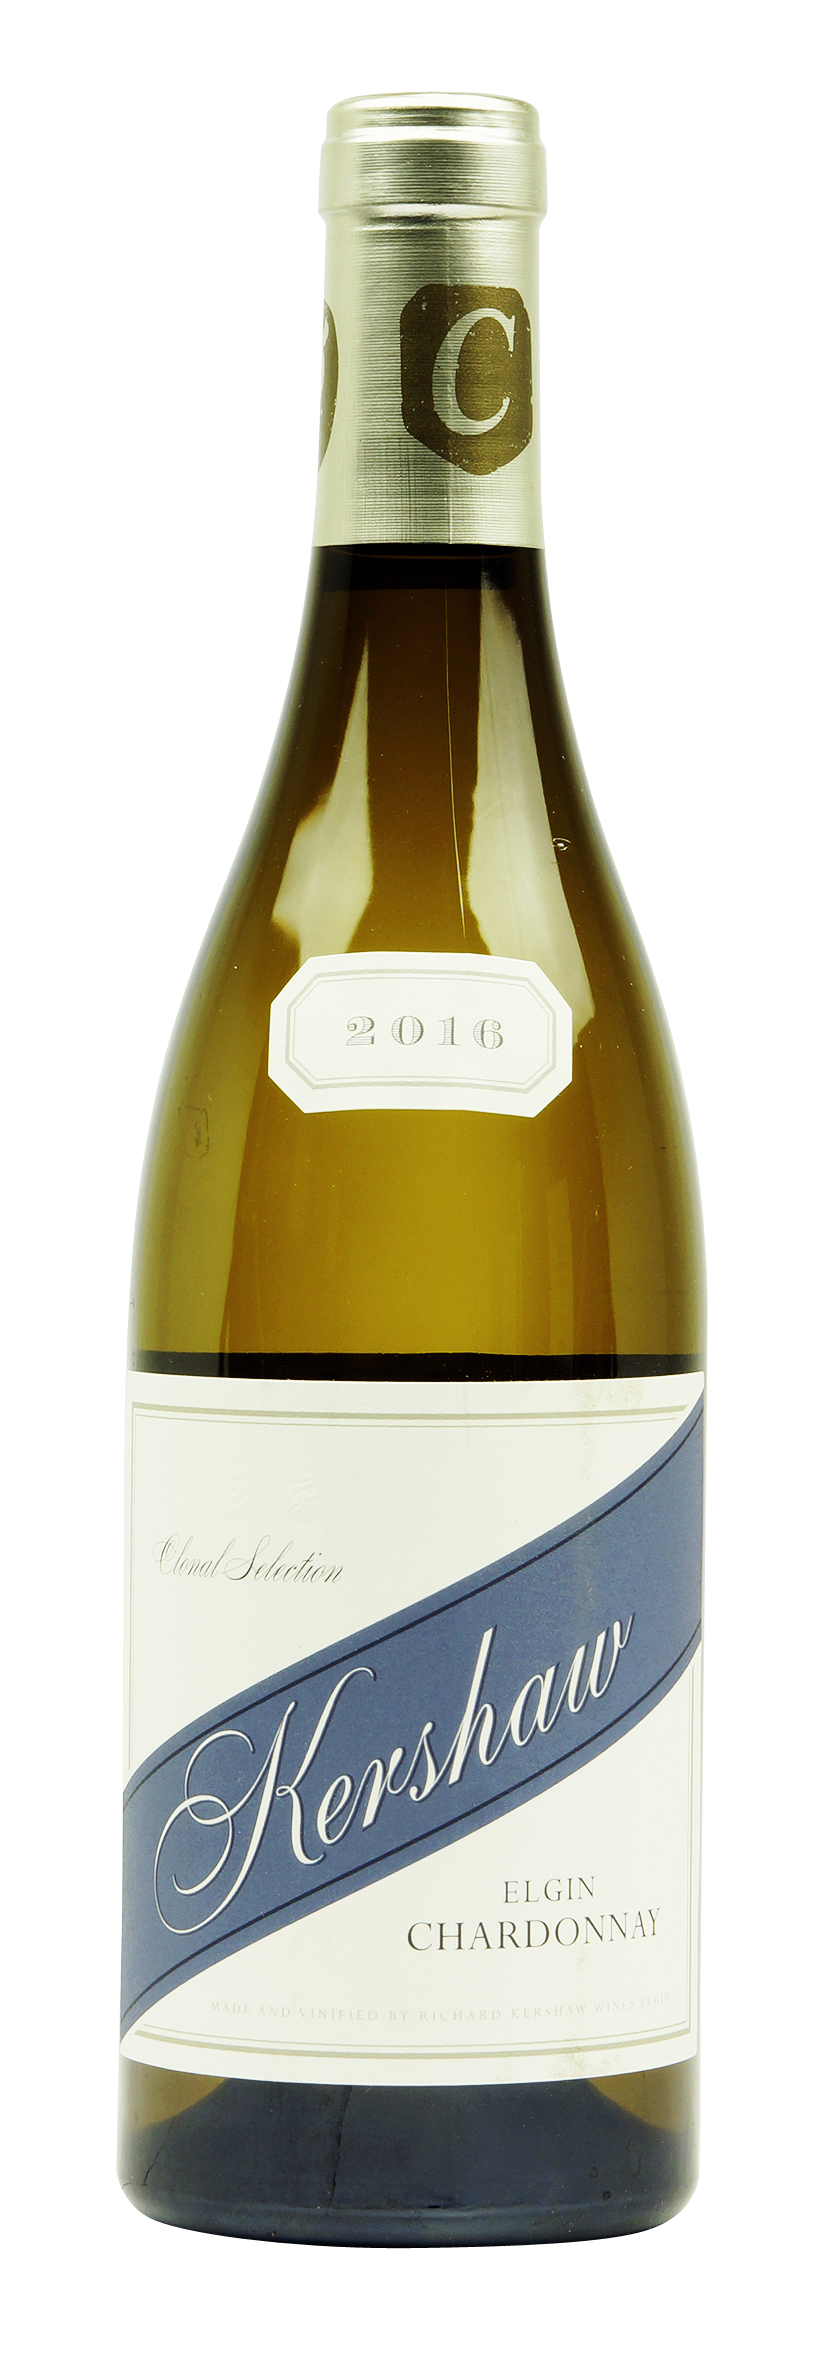 W.O. Elgin Chardonnay Clonal Selection 2016